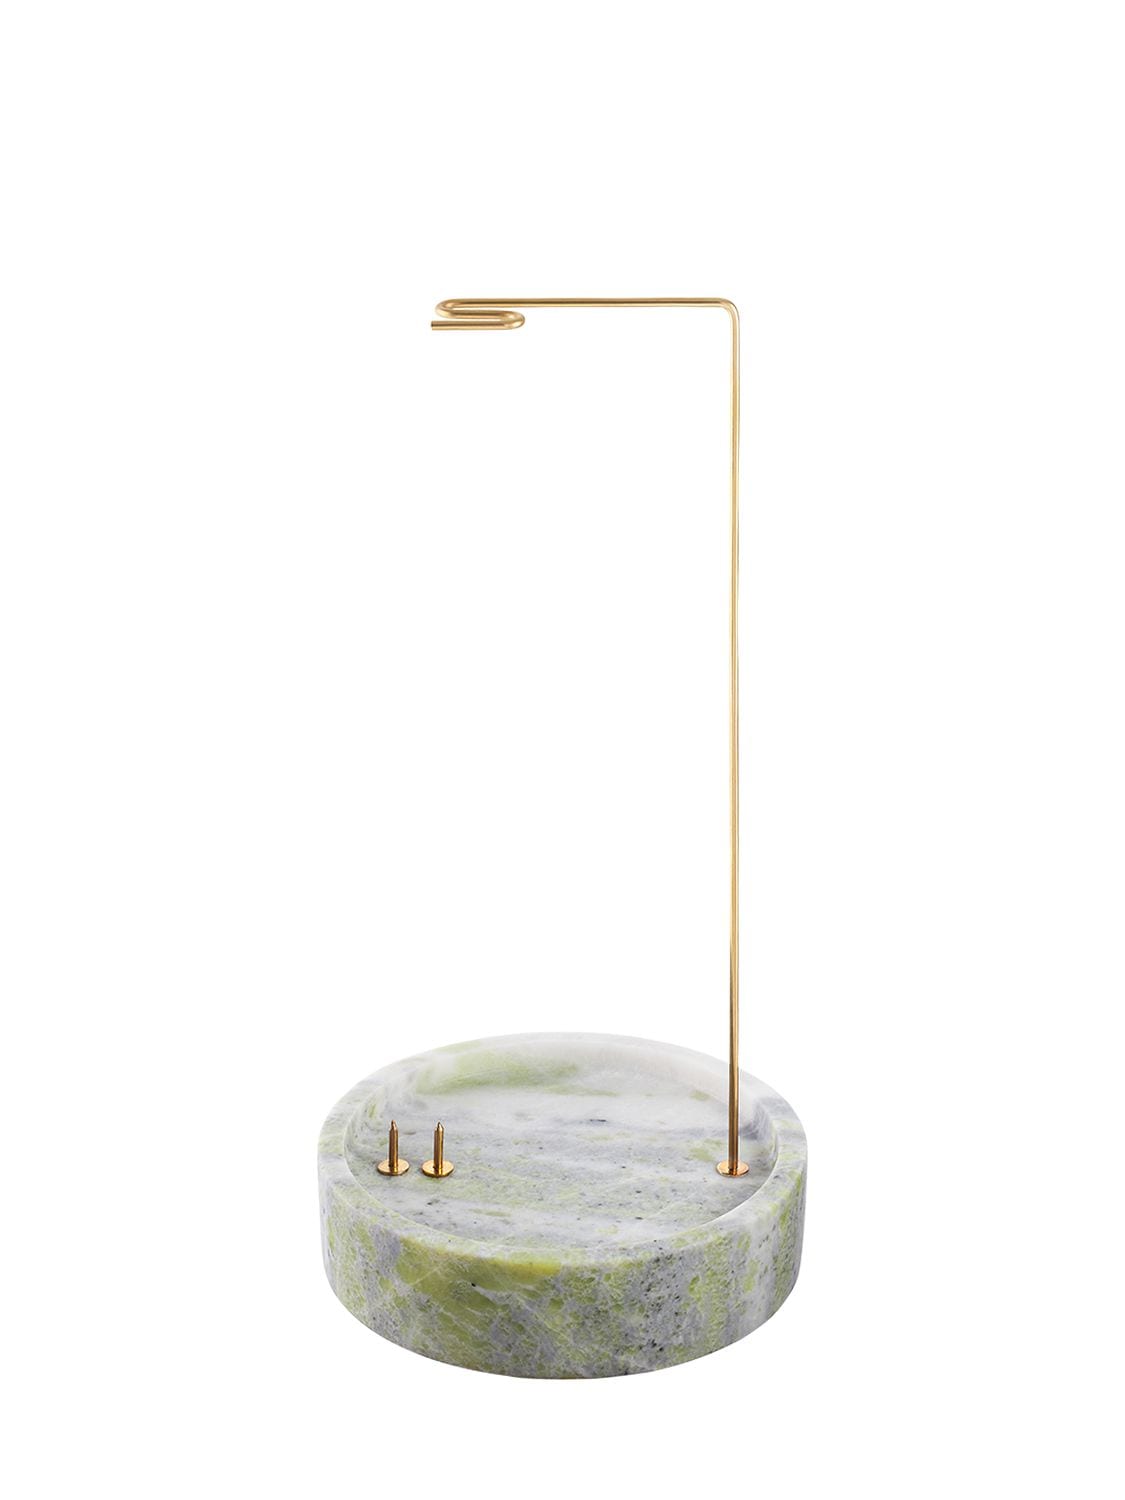 Bloc Studios N.3 Jade Marble Posture Vase In Gold,multi